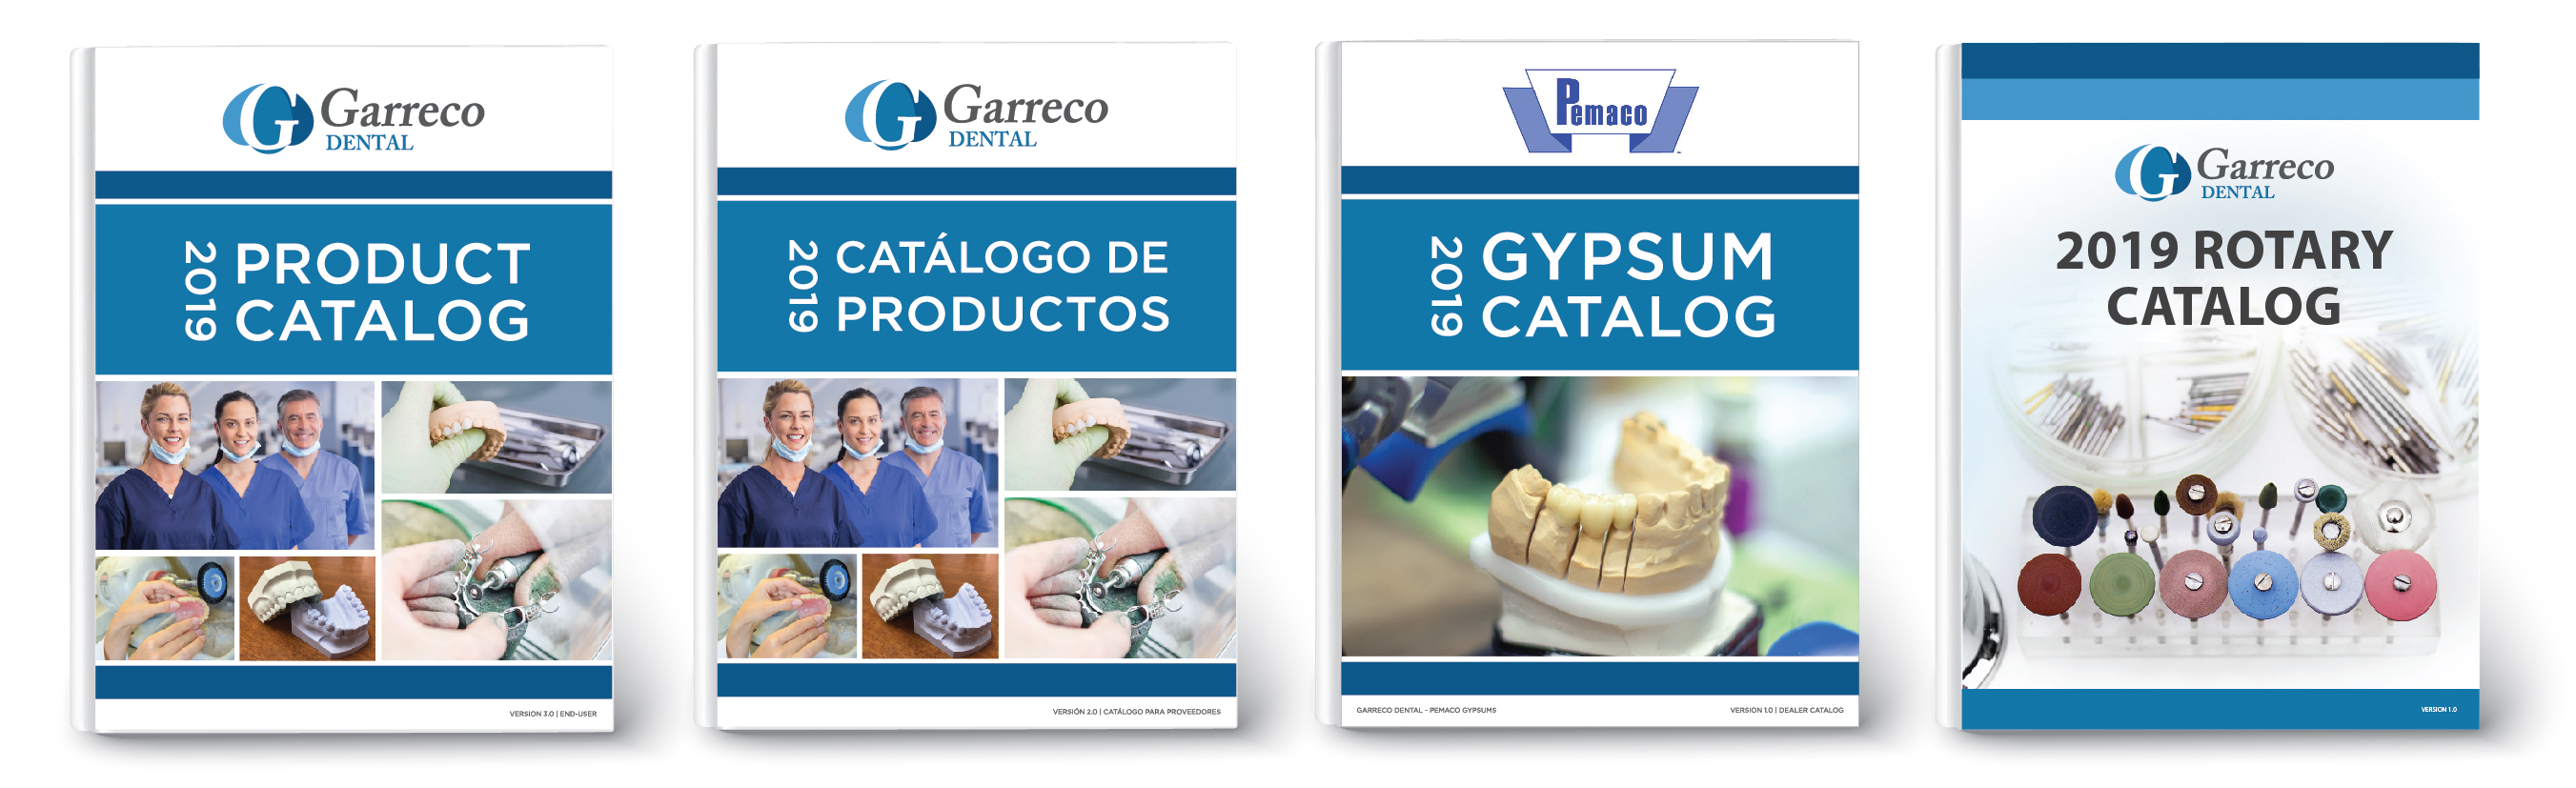 Garreco Dental Product Catalogs 2019 - Download